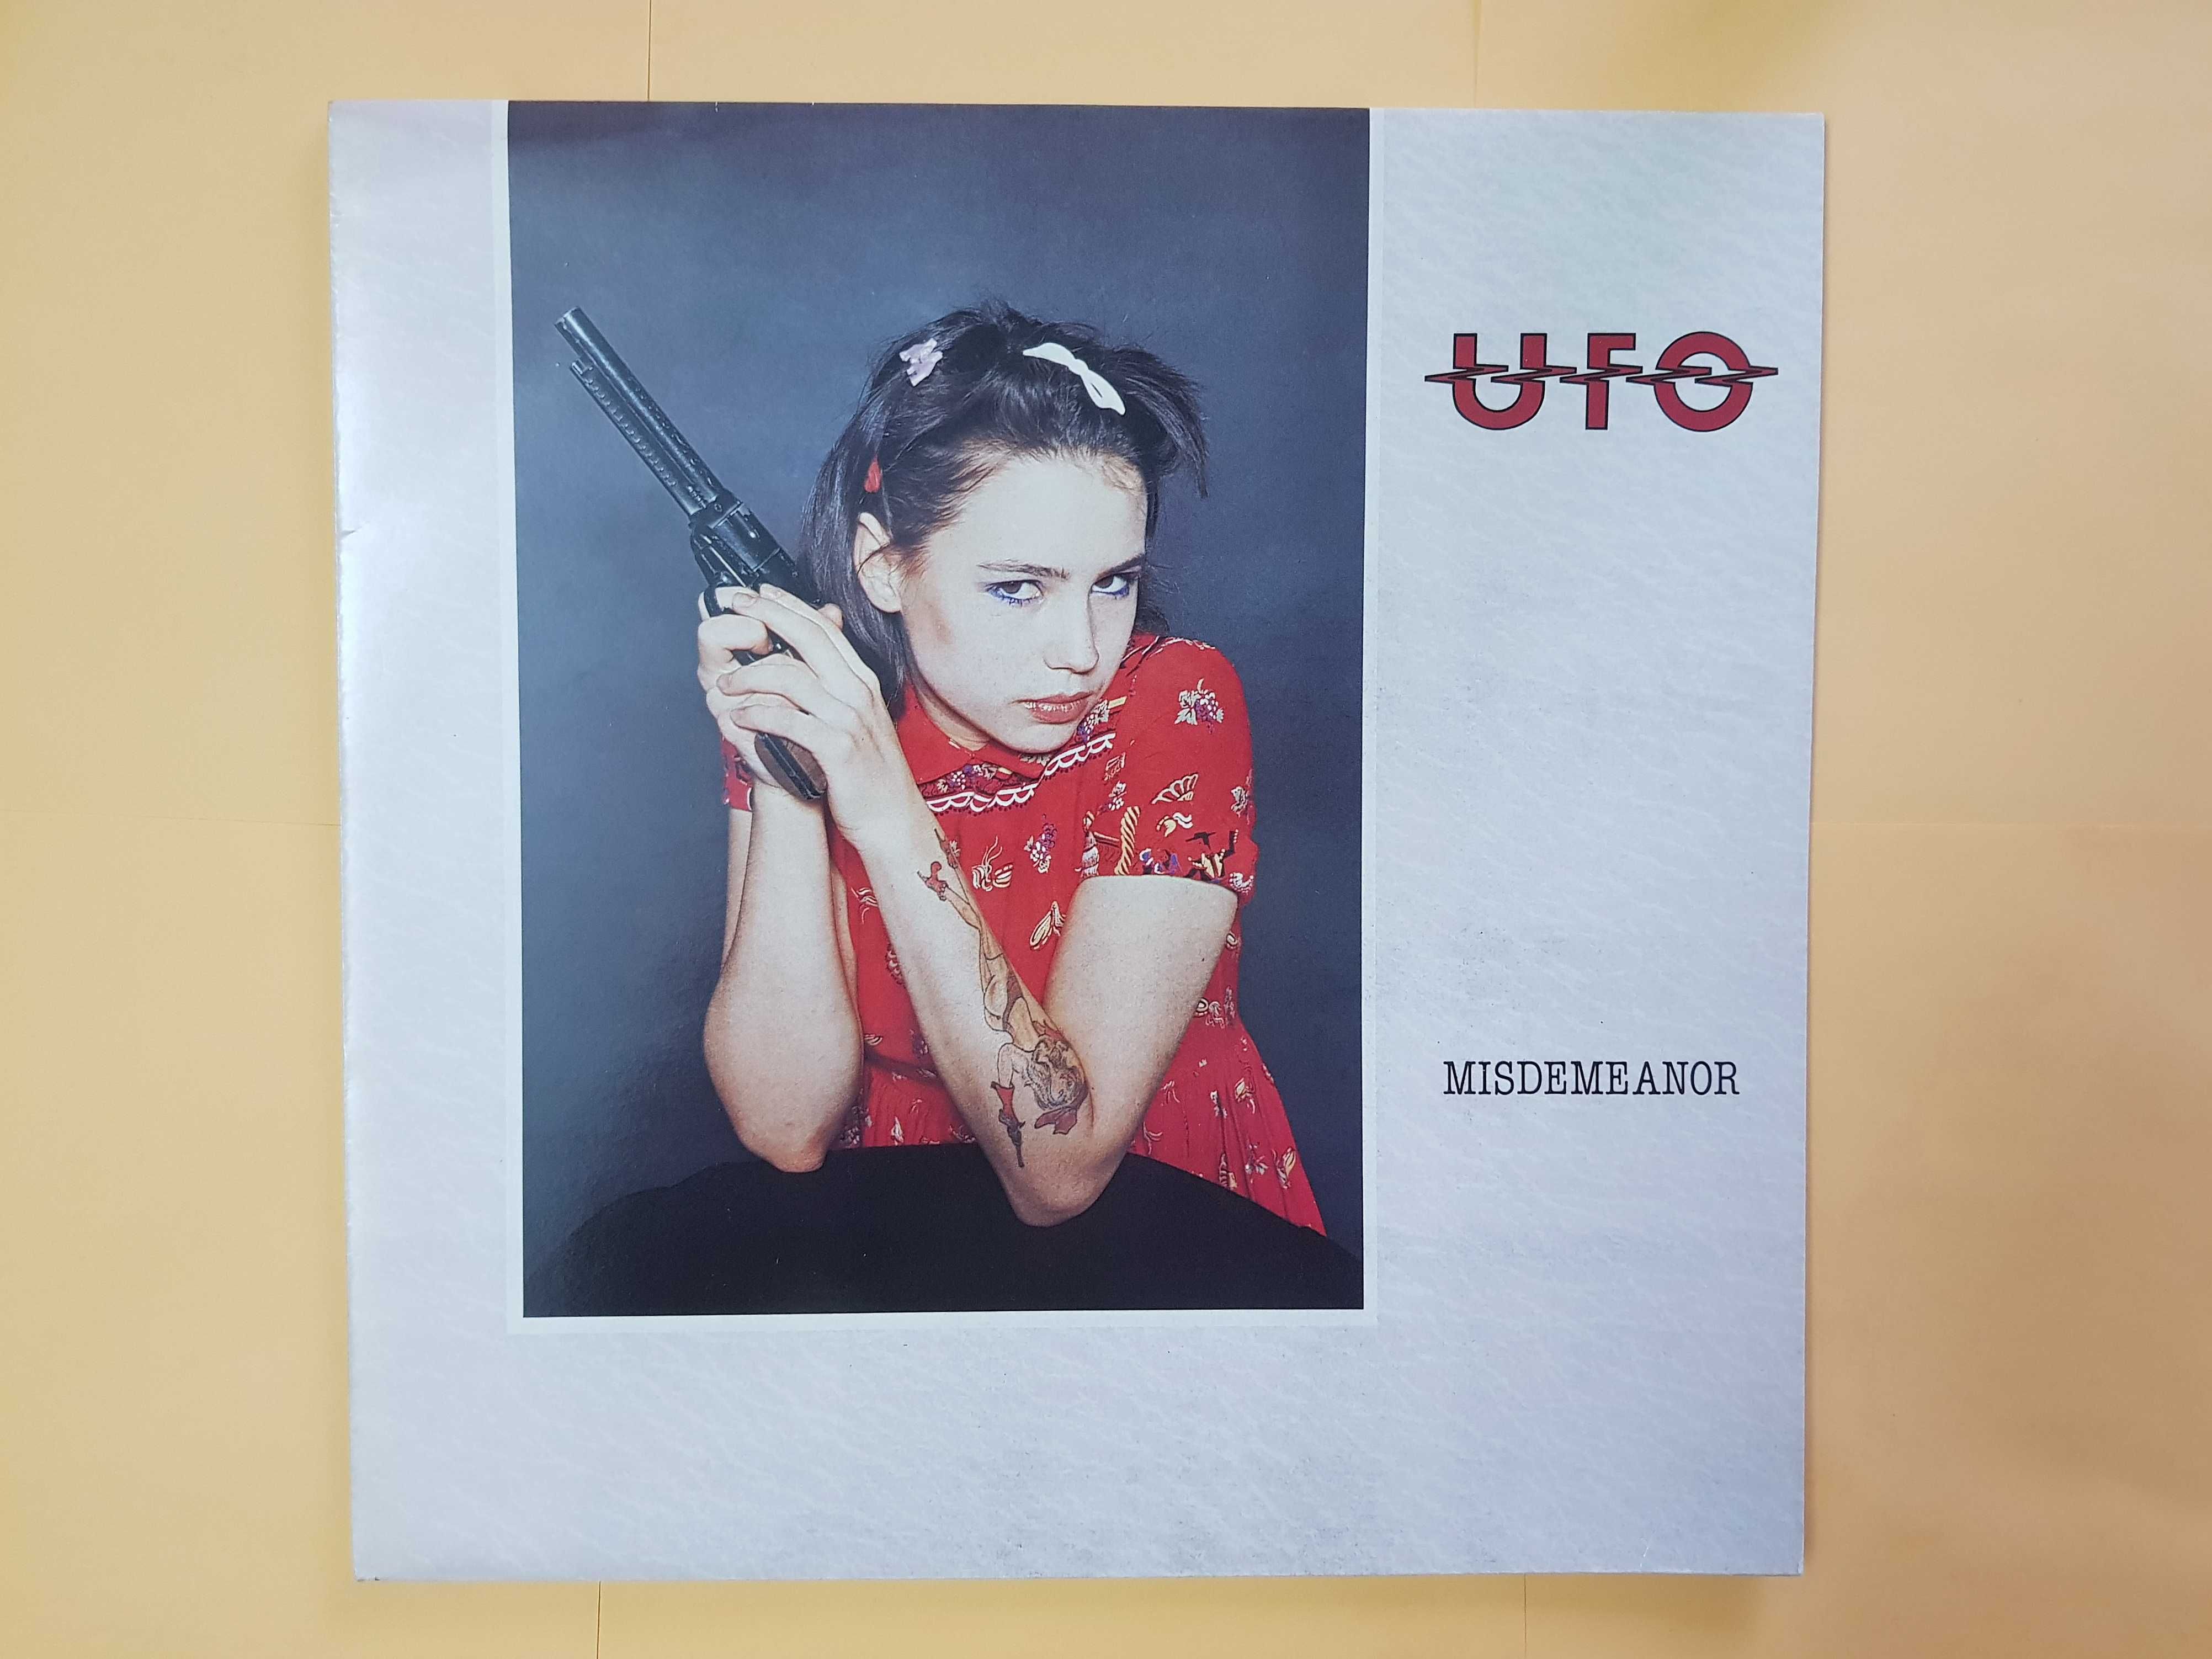 Виниловая пластинка UFO - Misdemeanor  (пр-во Великобритания, 1985)